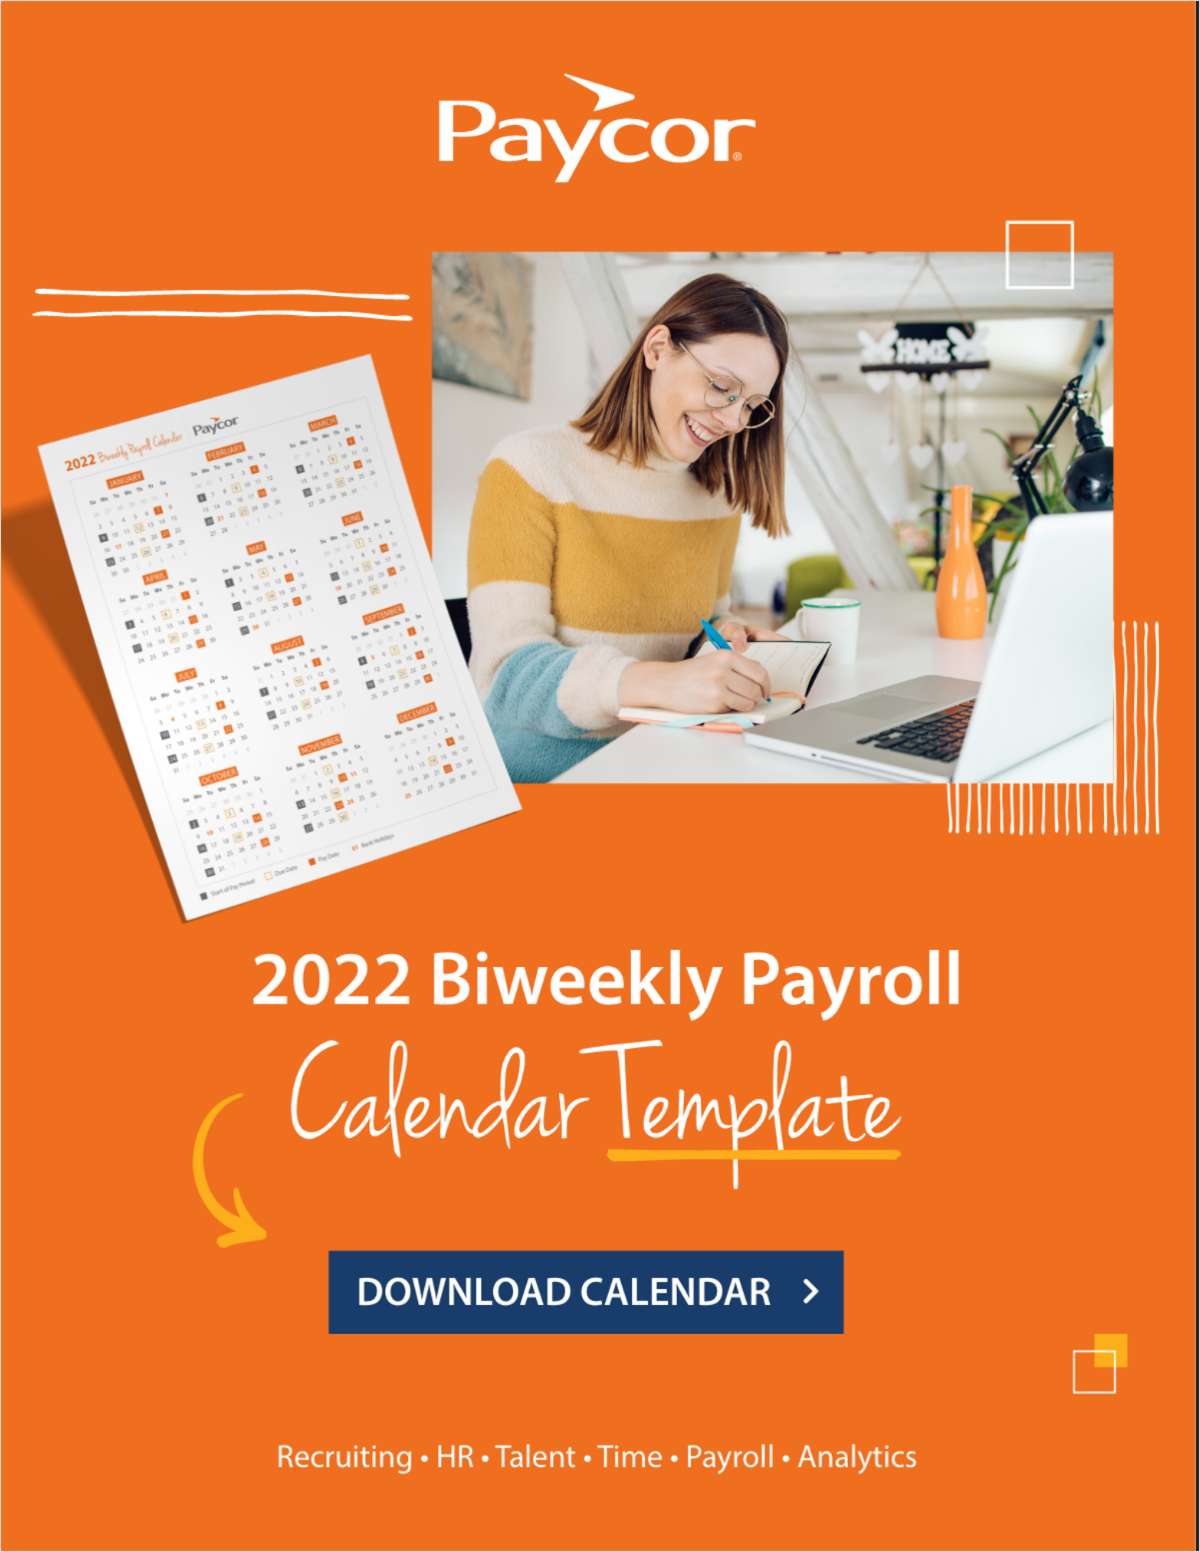 2022 Biweekly Payroll Calendar Template, Free Paycor, Inc. Template